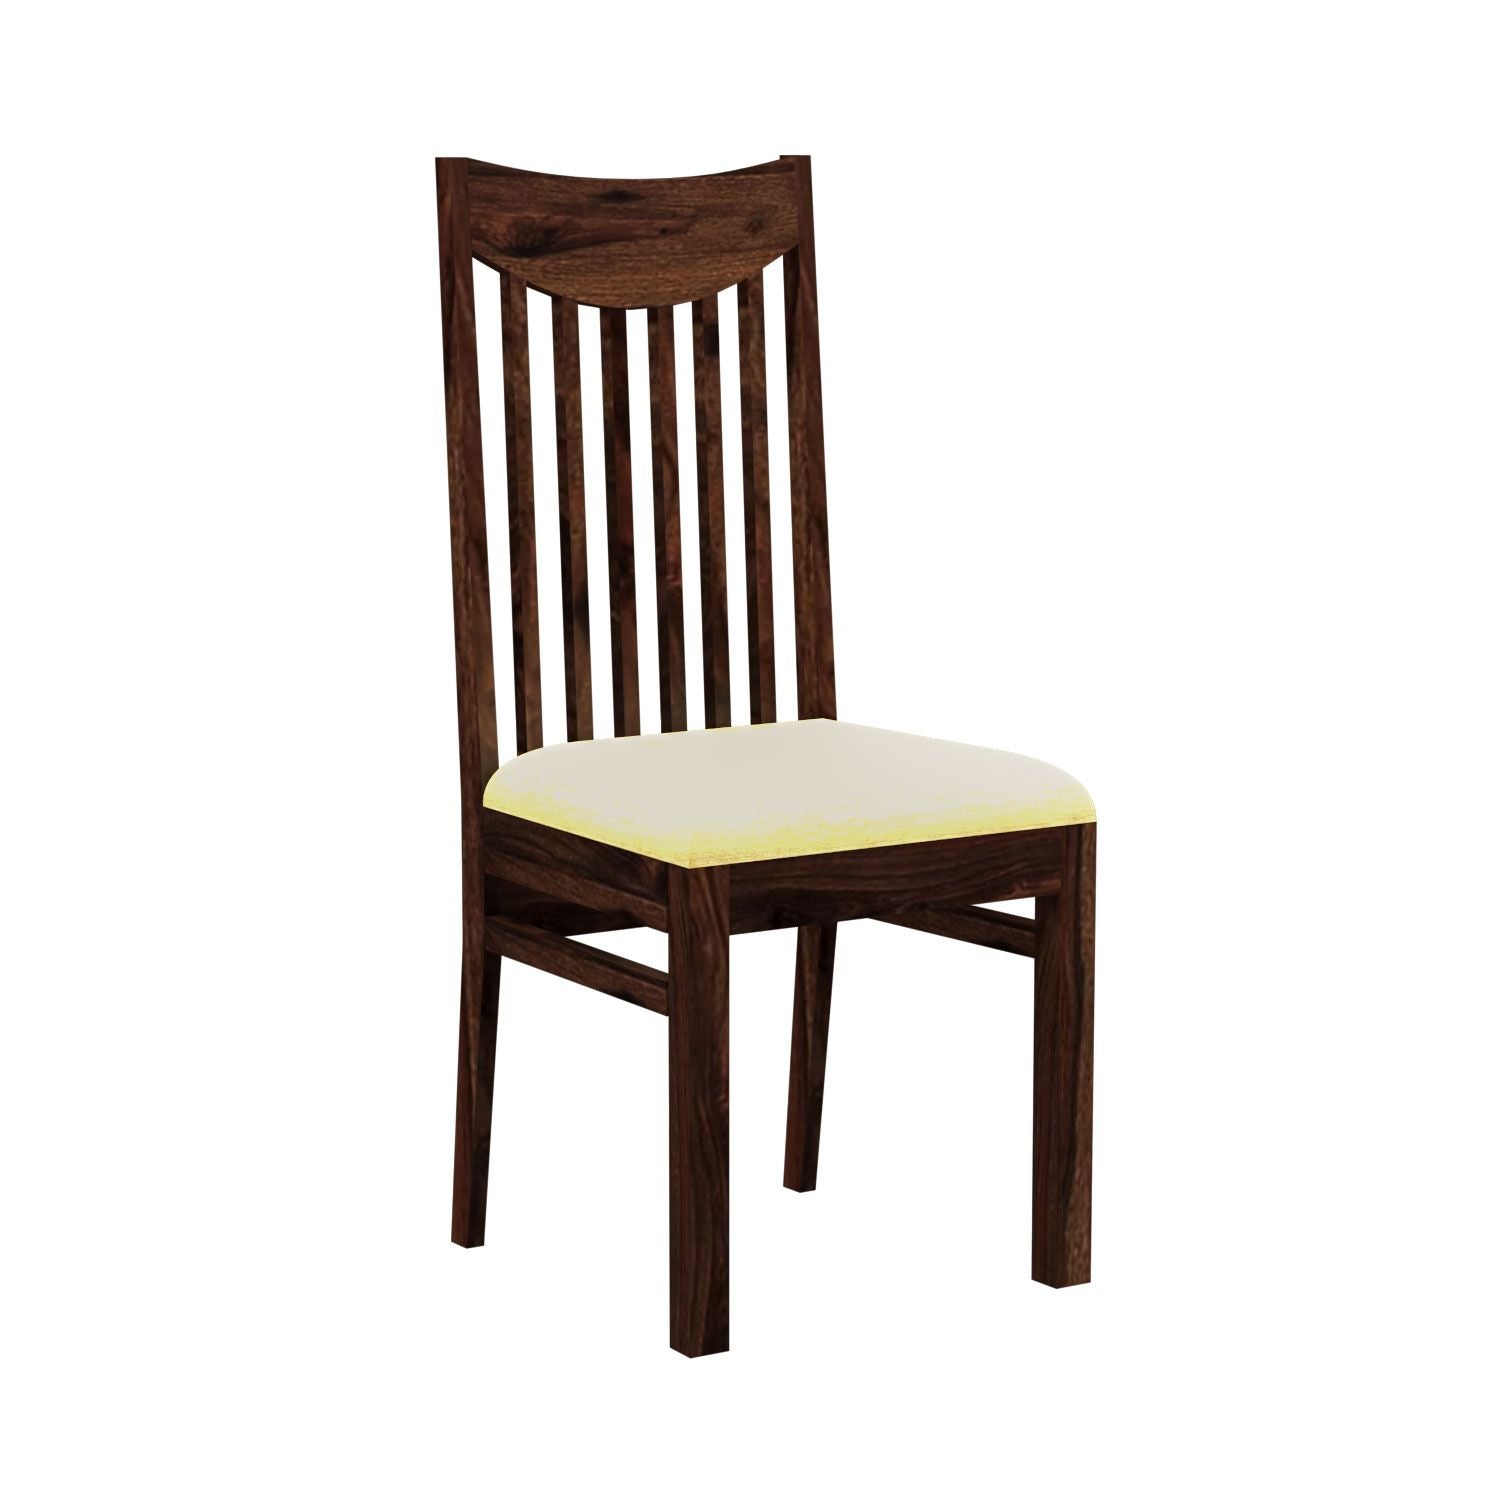 Moon Solid Sheesham Wood Chair (With Cushion, Walnut Finish)